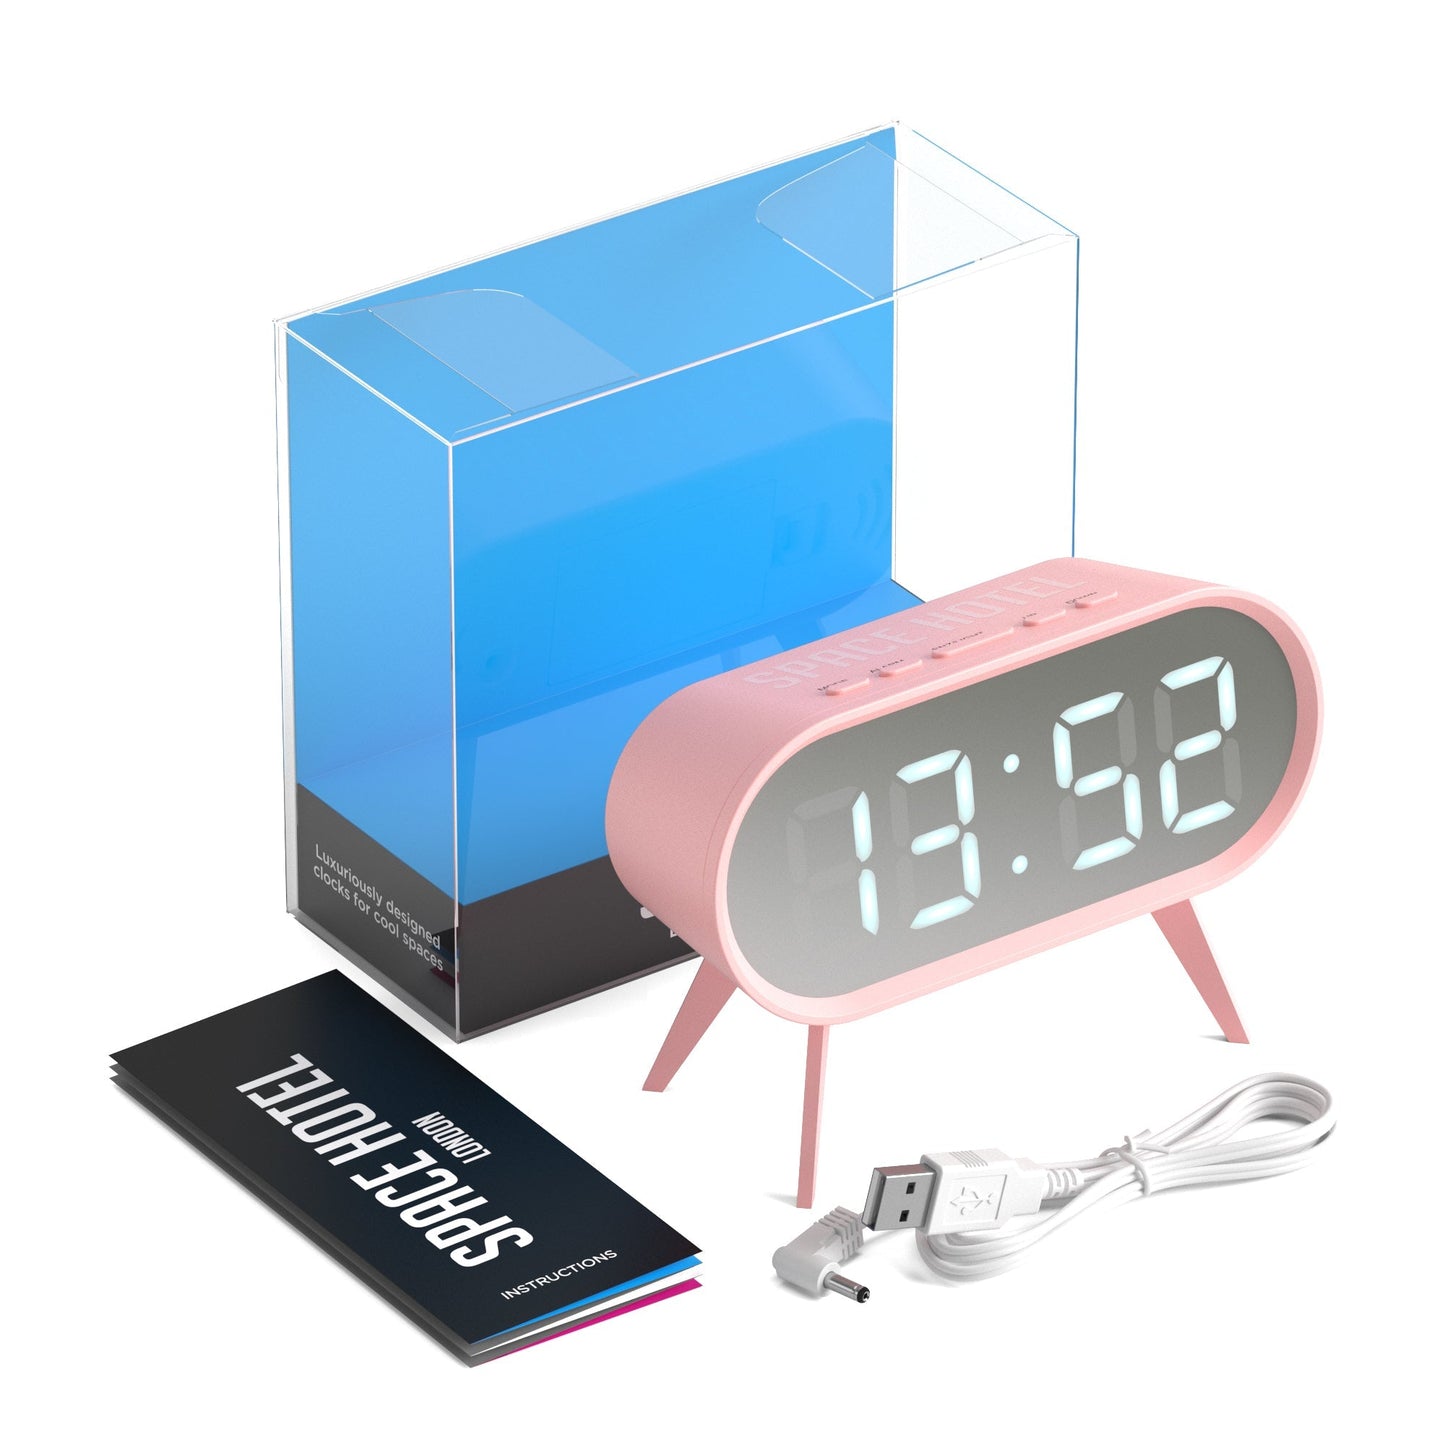 Newgate Space Hotel Cyborg Led Alarm Clock Pink-Newgate-Mood